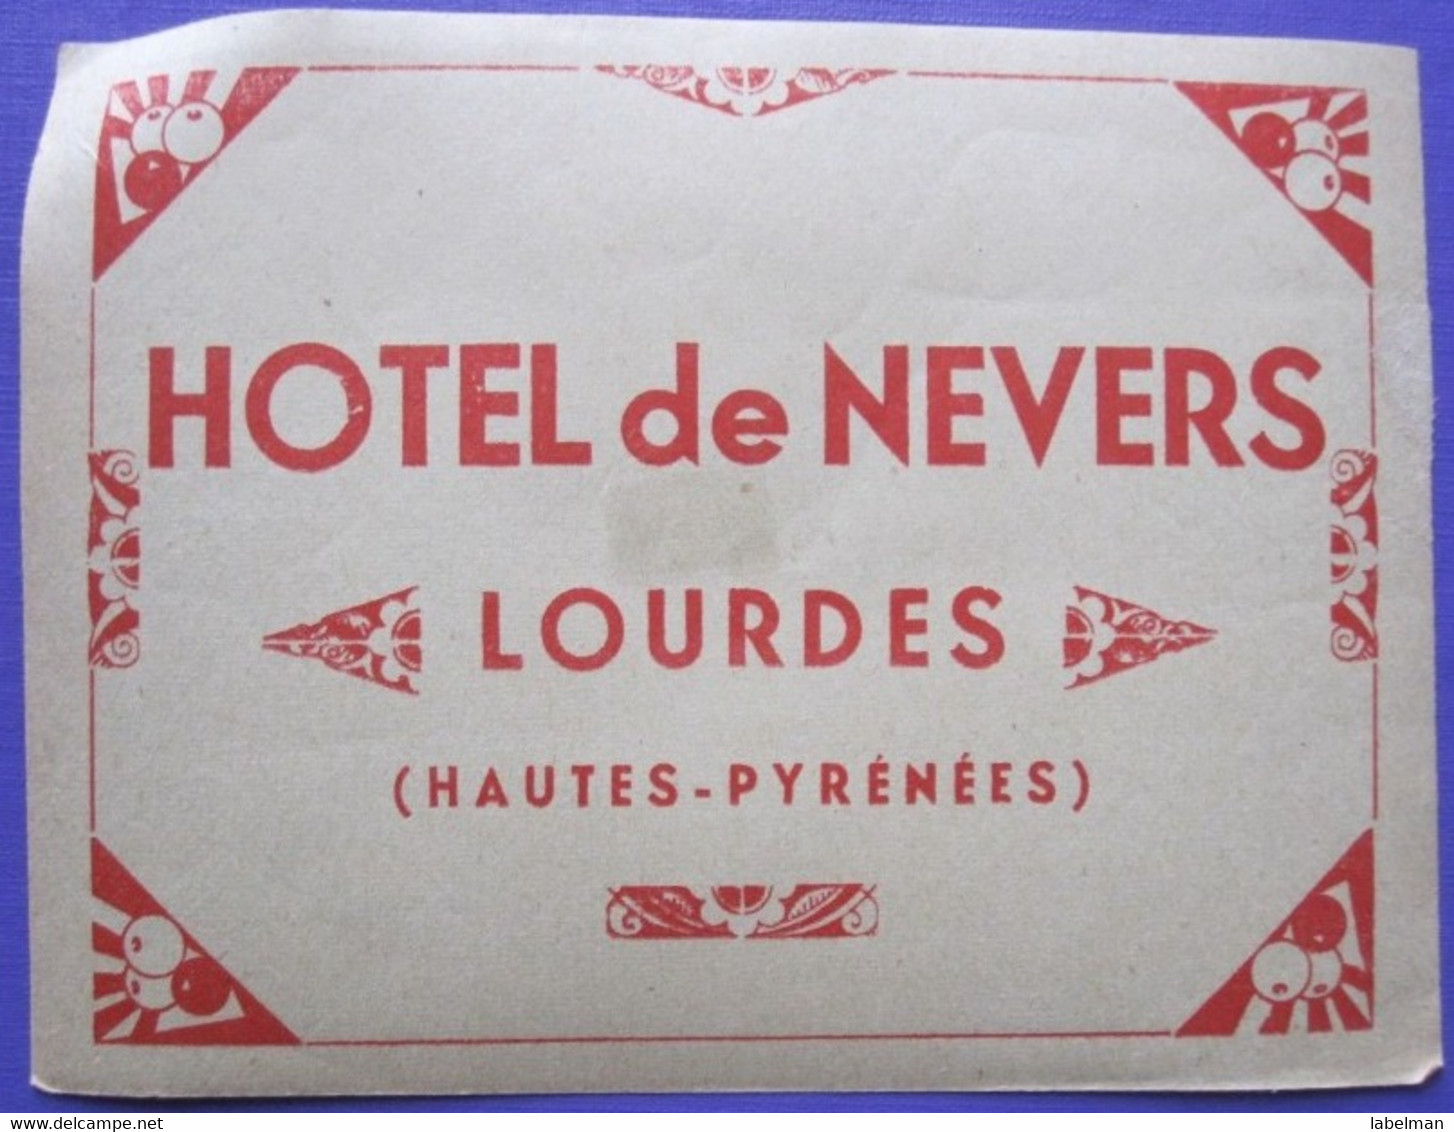 HOTEL AUBERGE NEVERS LOURDES PYRENEES DECAL FRANCE STICKER LUGGAGE LABEL ETIQUETA ETICHETTA ETIQUETTE AUFKLEBER PARIS - Hotel Labels